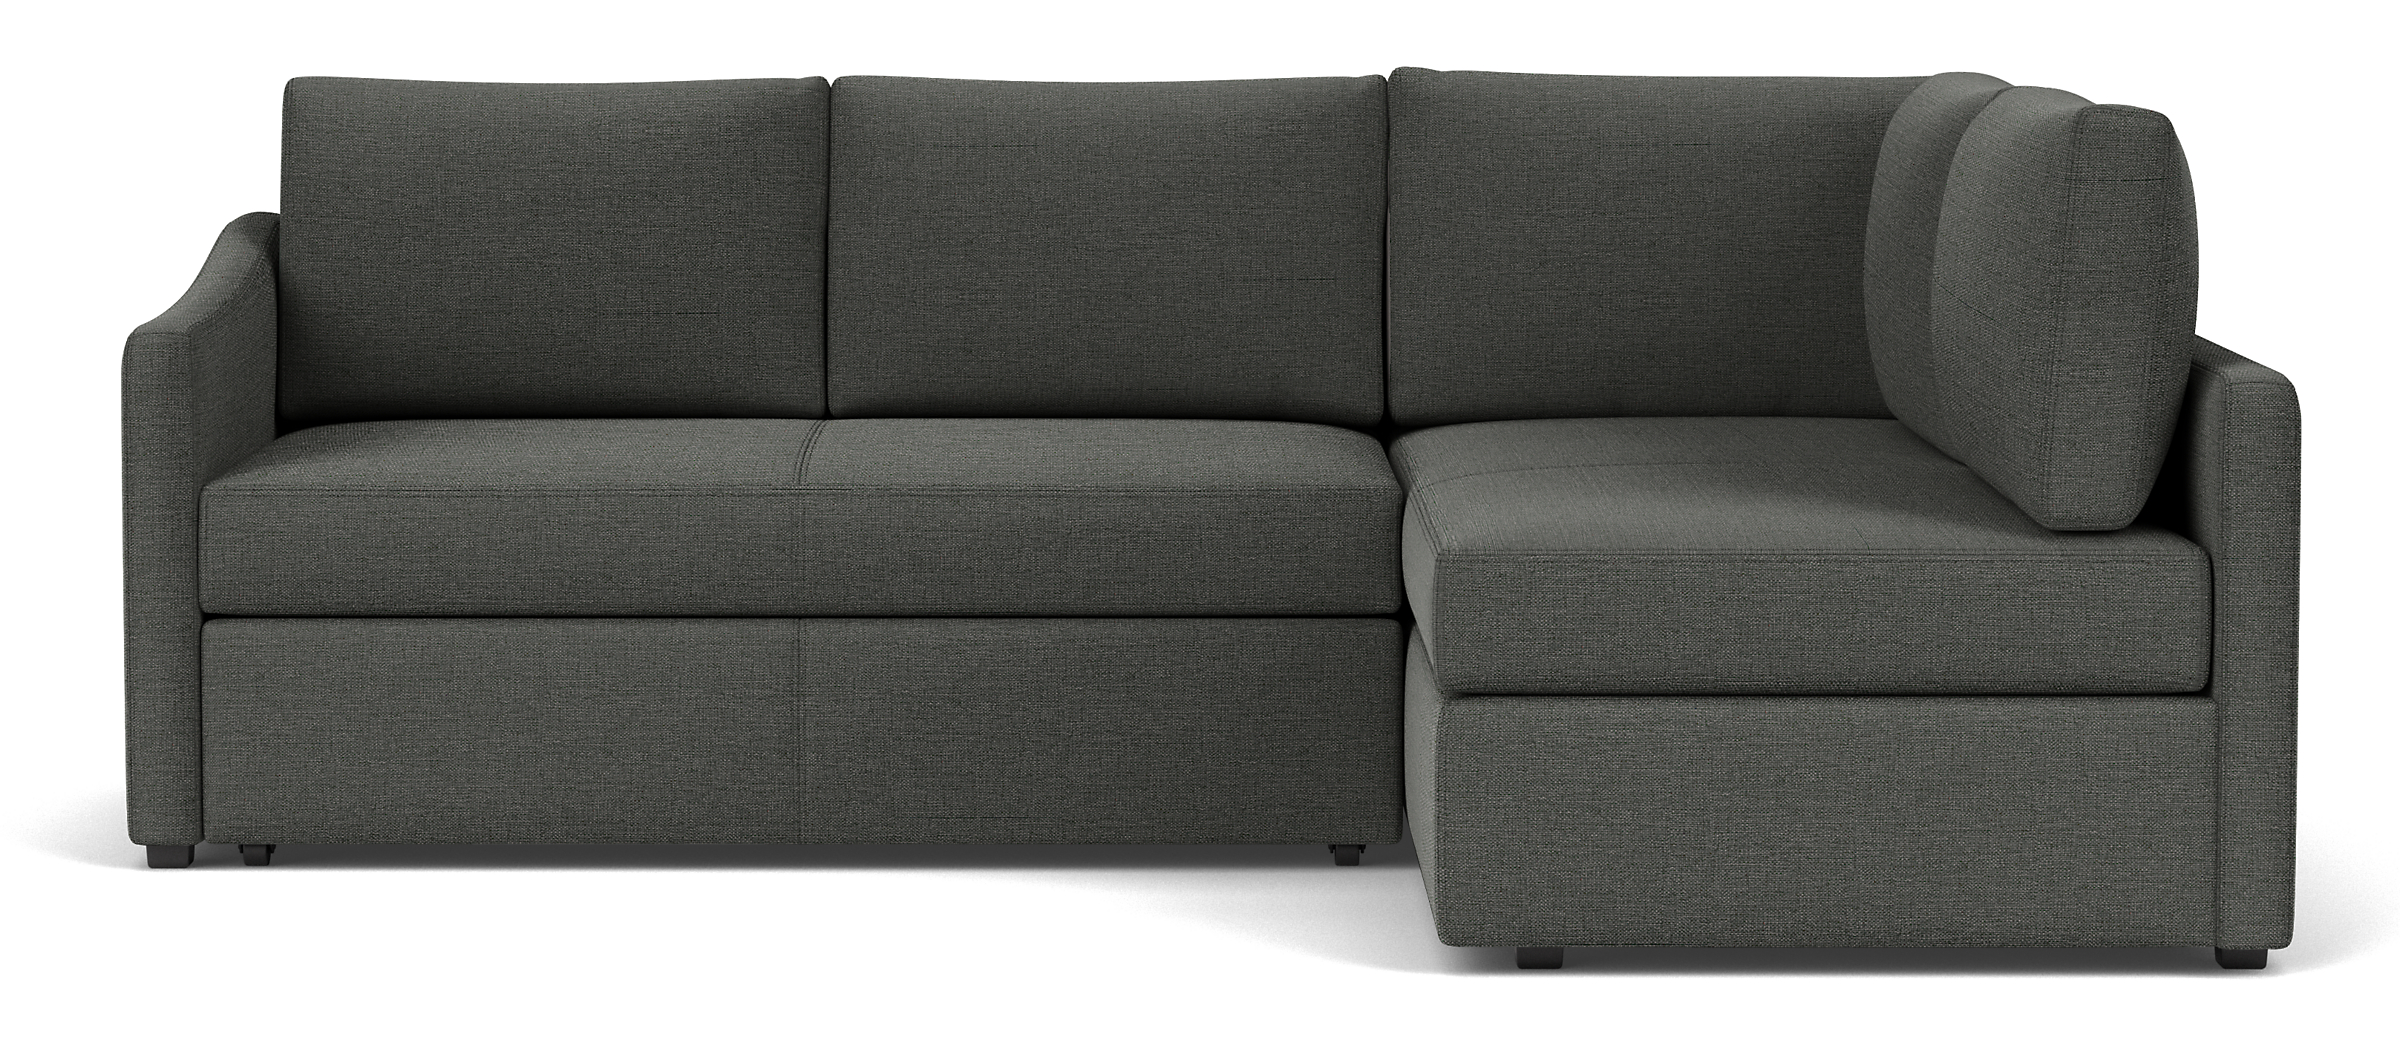 Oxford Pop-Up Platform Sleeper Sofa with Storage Chaise